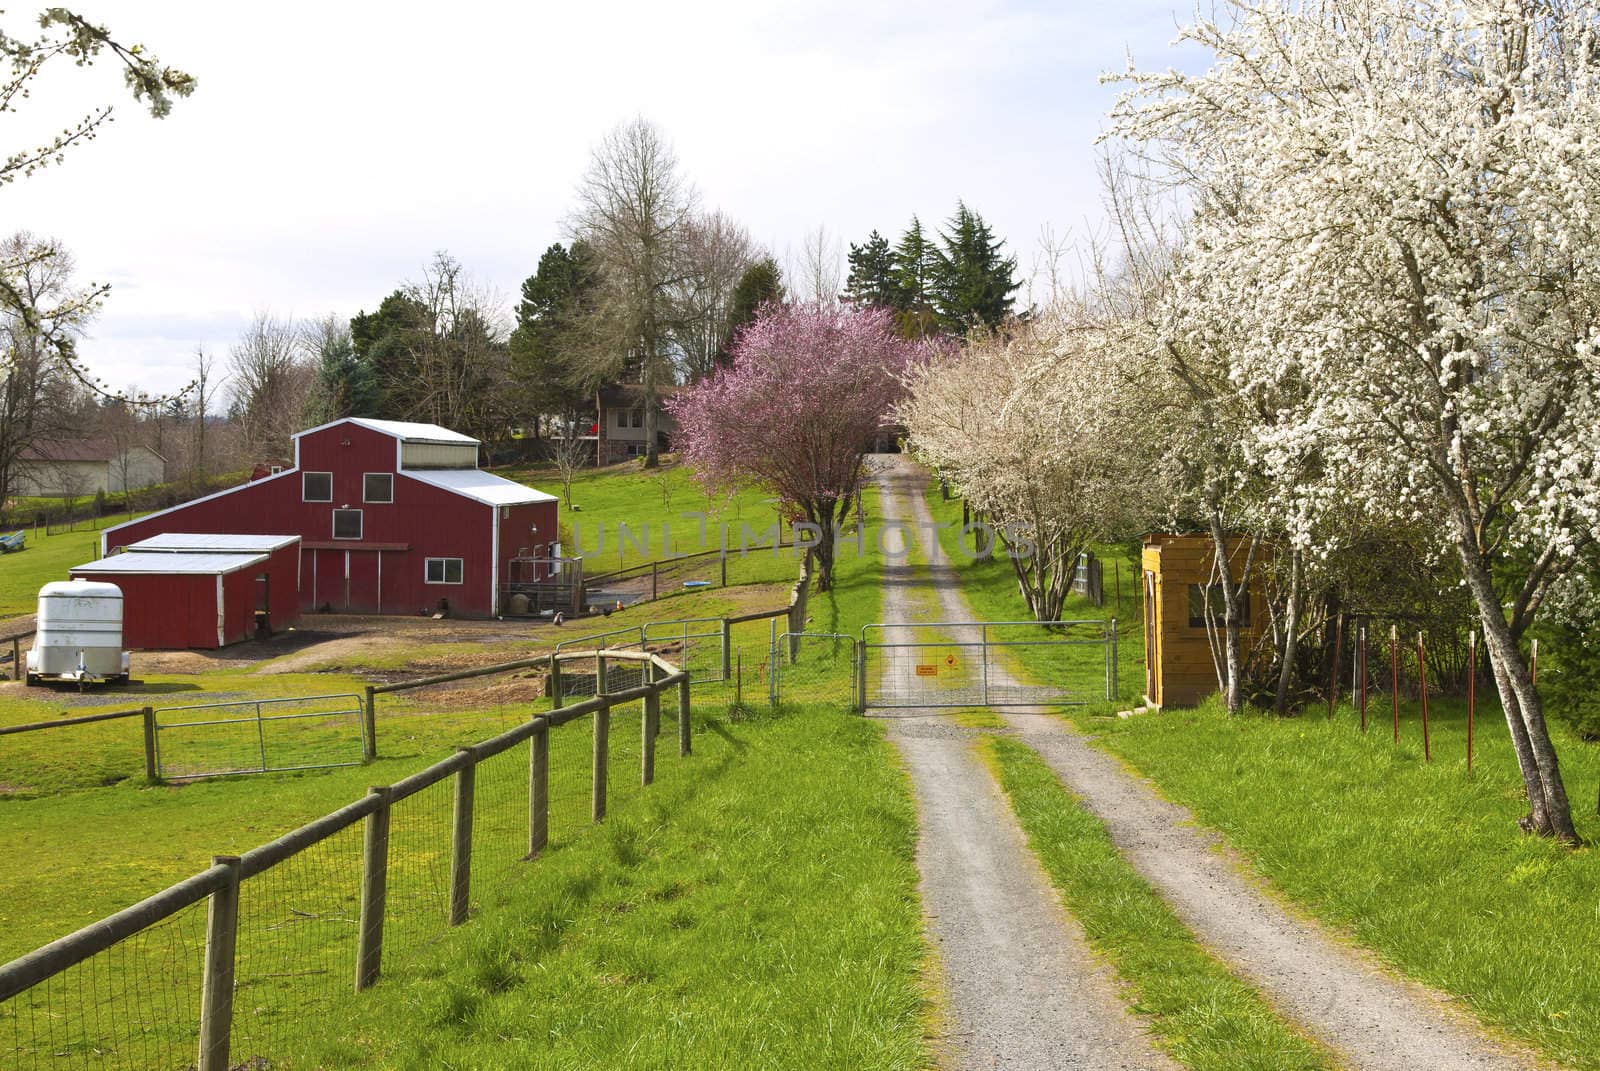 Family farm in rural Oregon. by Rigucci